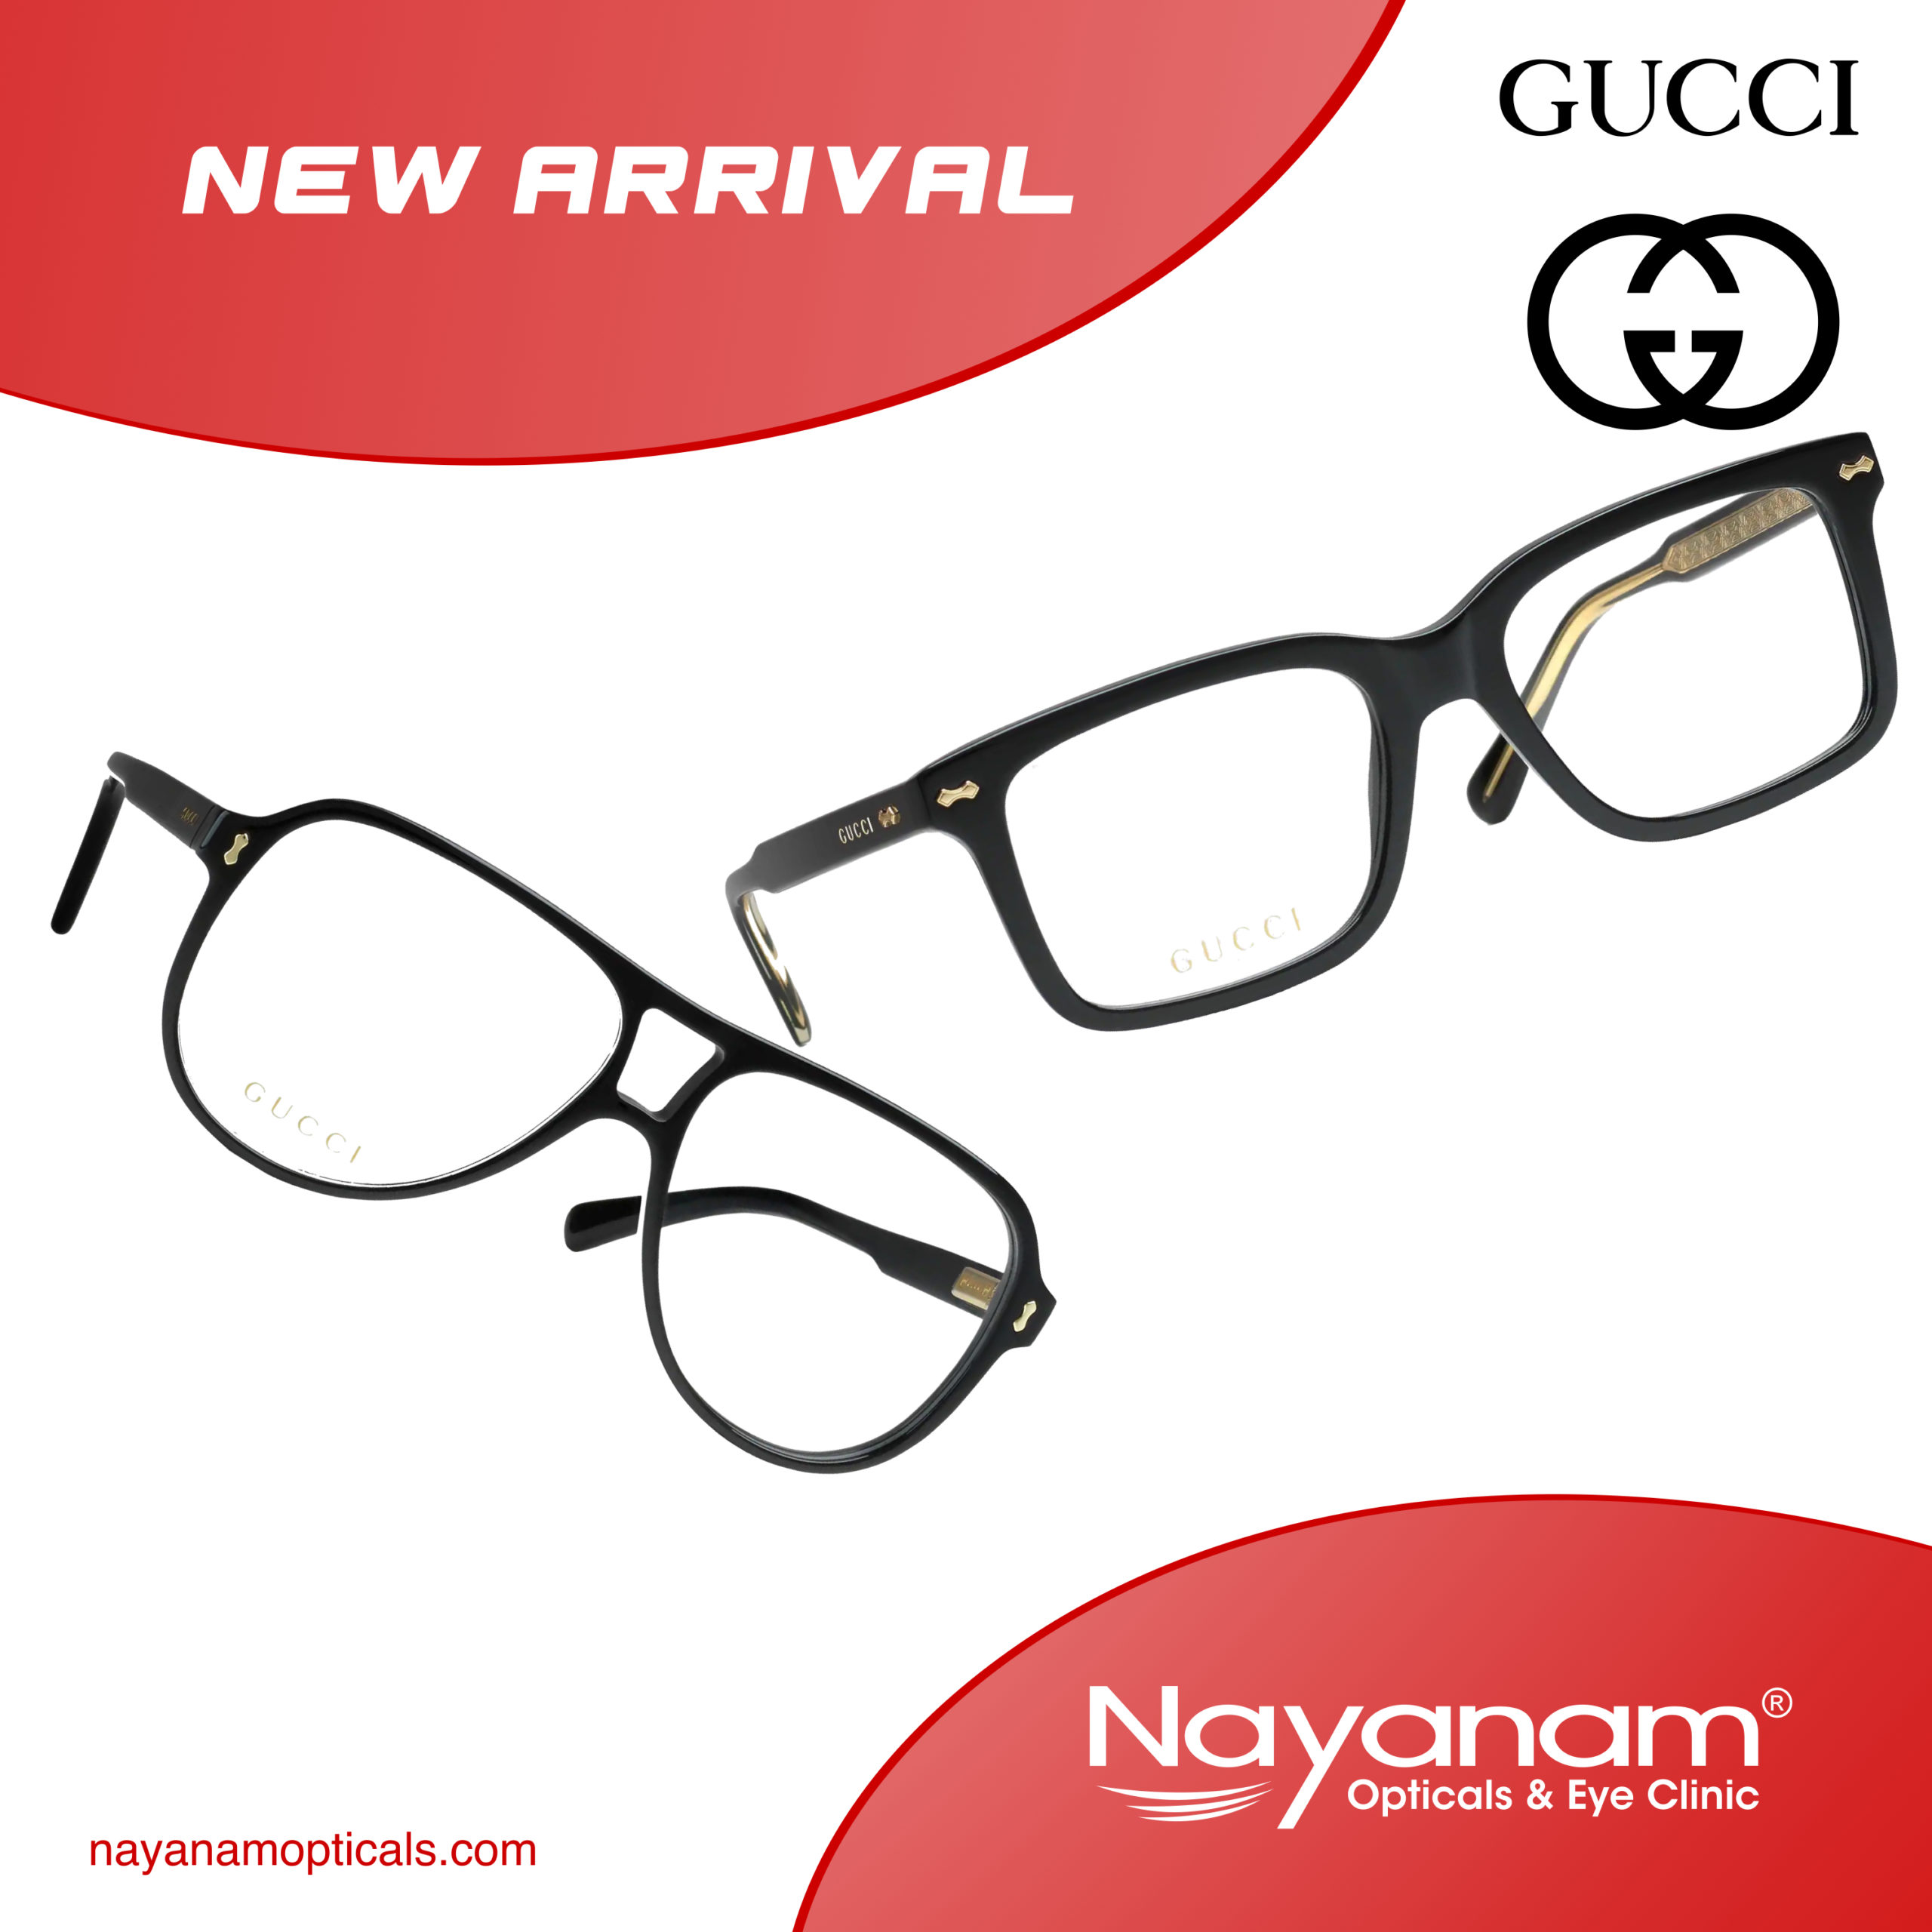 Gucci Eyewear In Kannur, Kerala, India - Nayanam Opticals & Eye Clinic